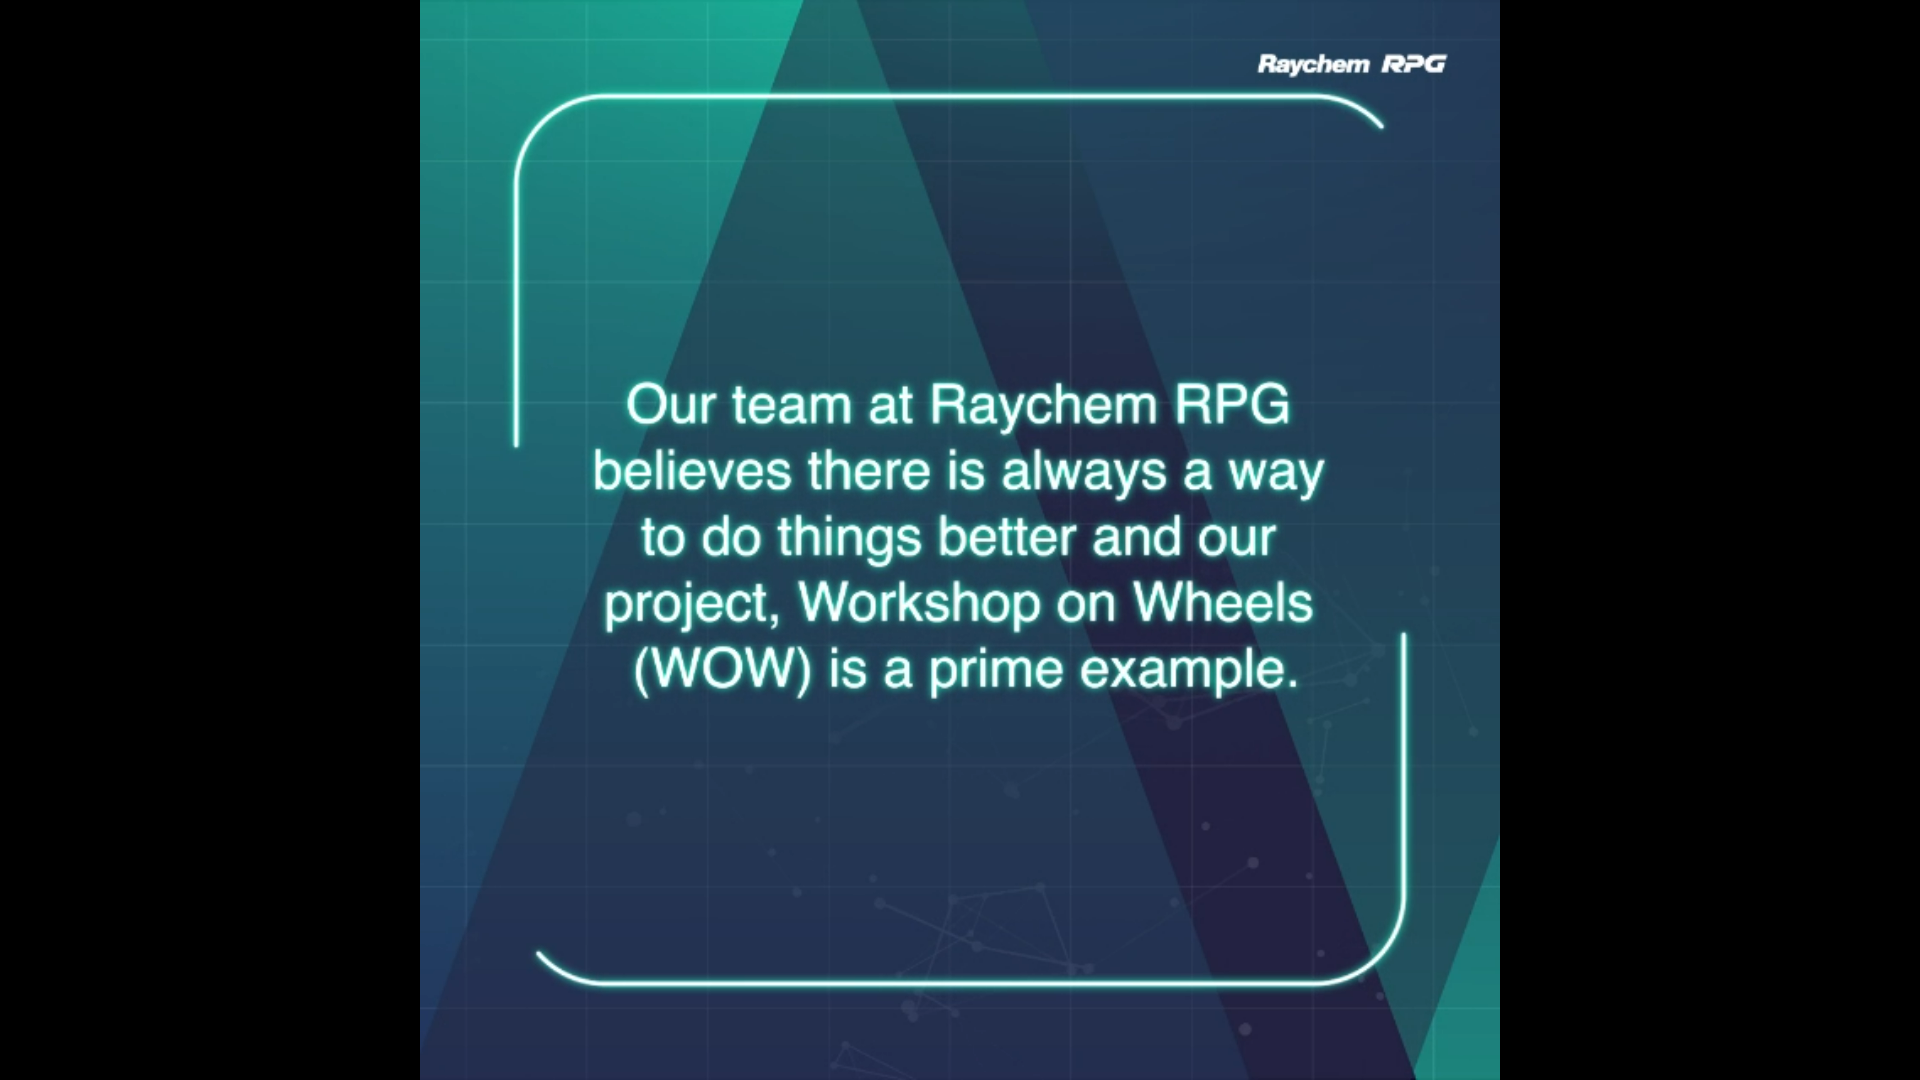 Raychem RPG's Workshop-on-Wheels service